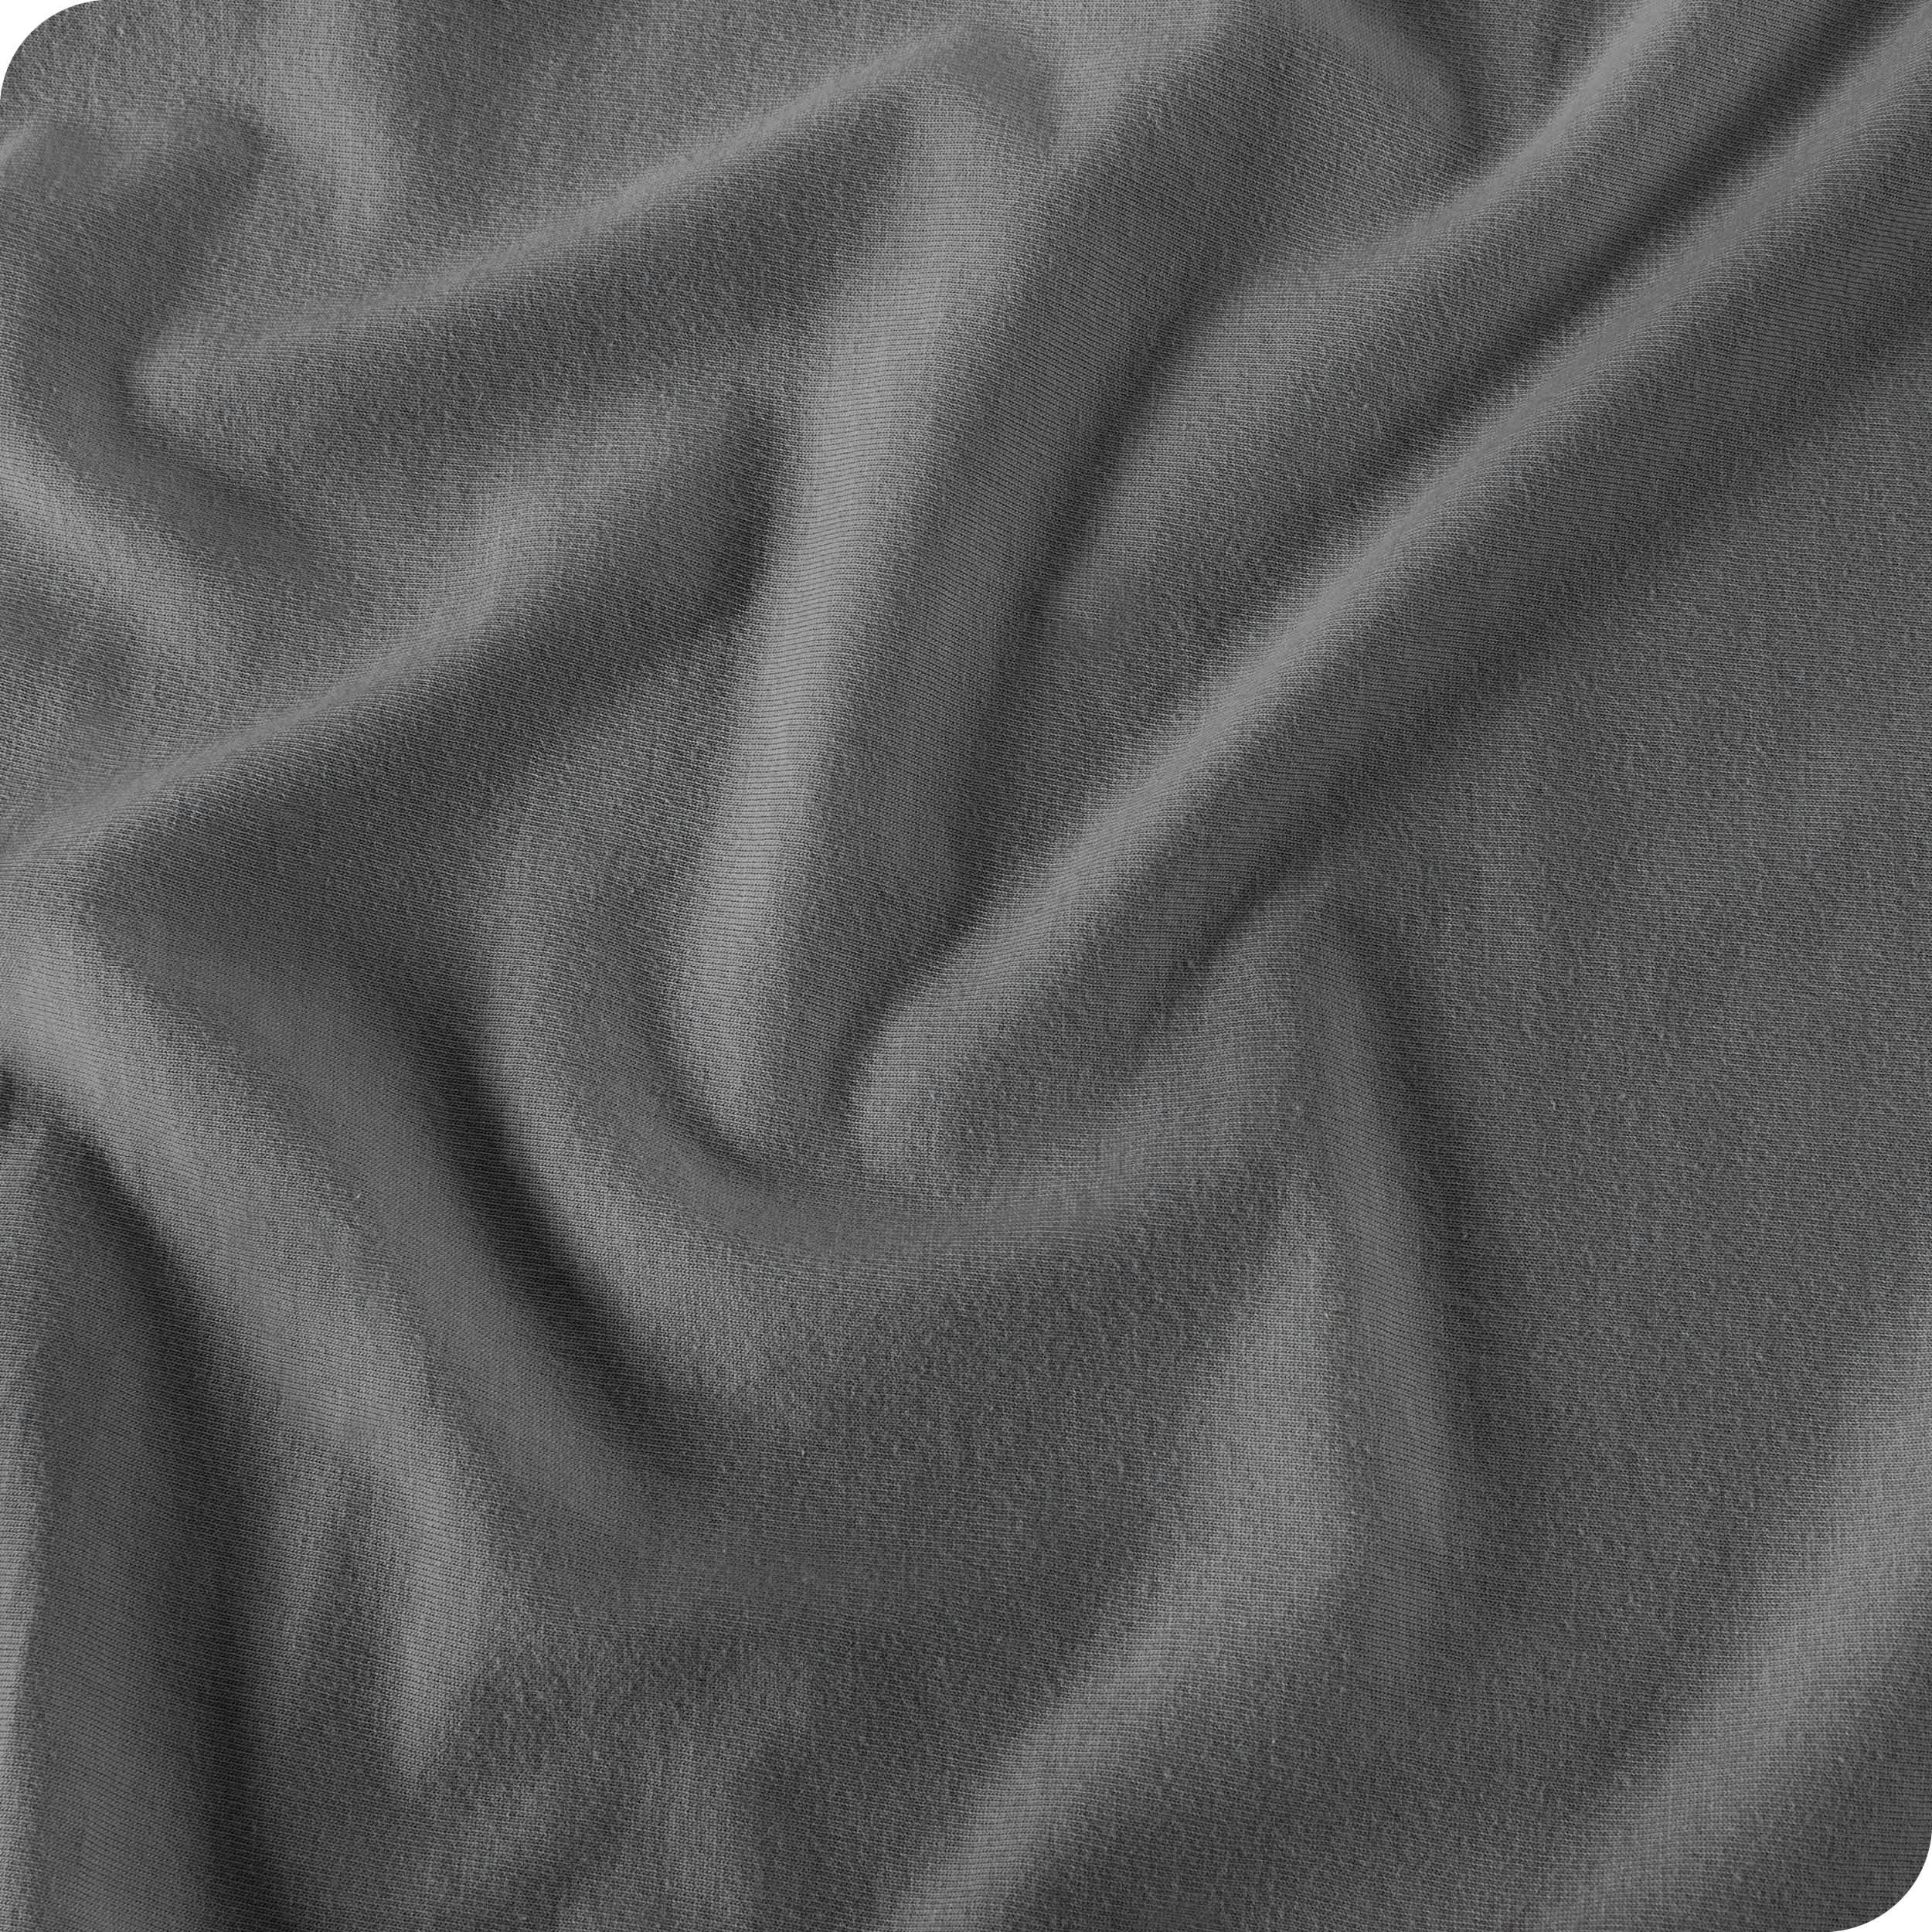 Close up of organic cotton jersey sheet material